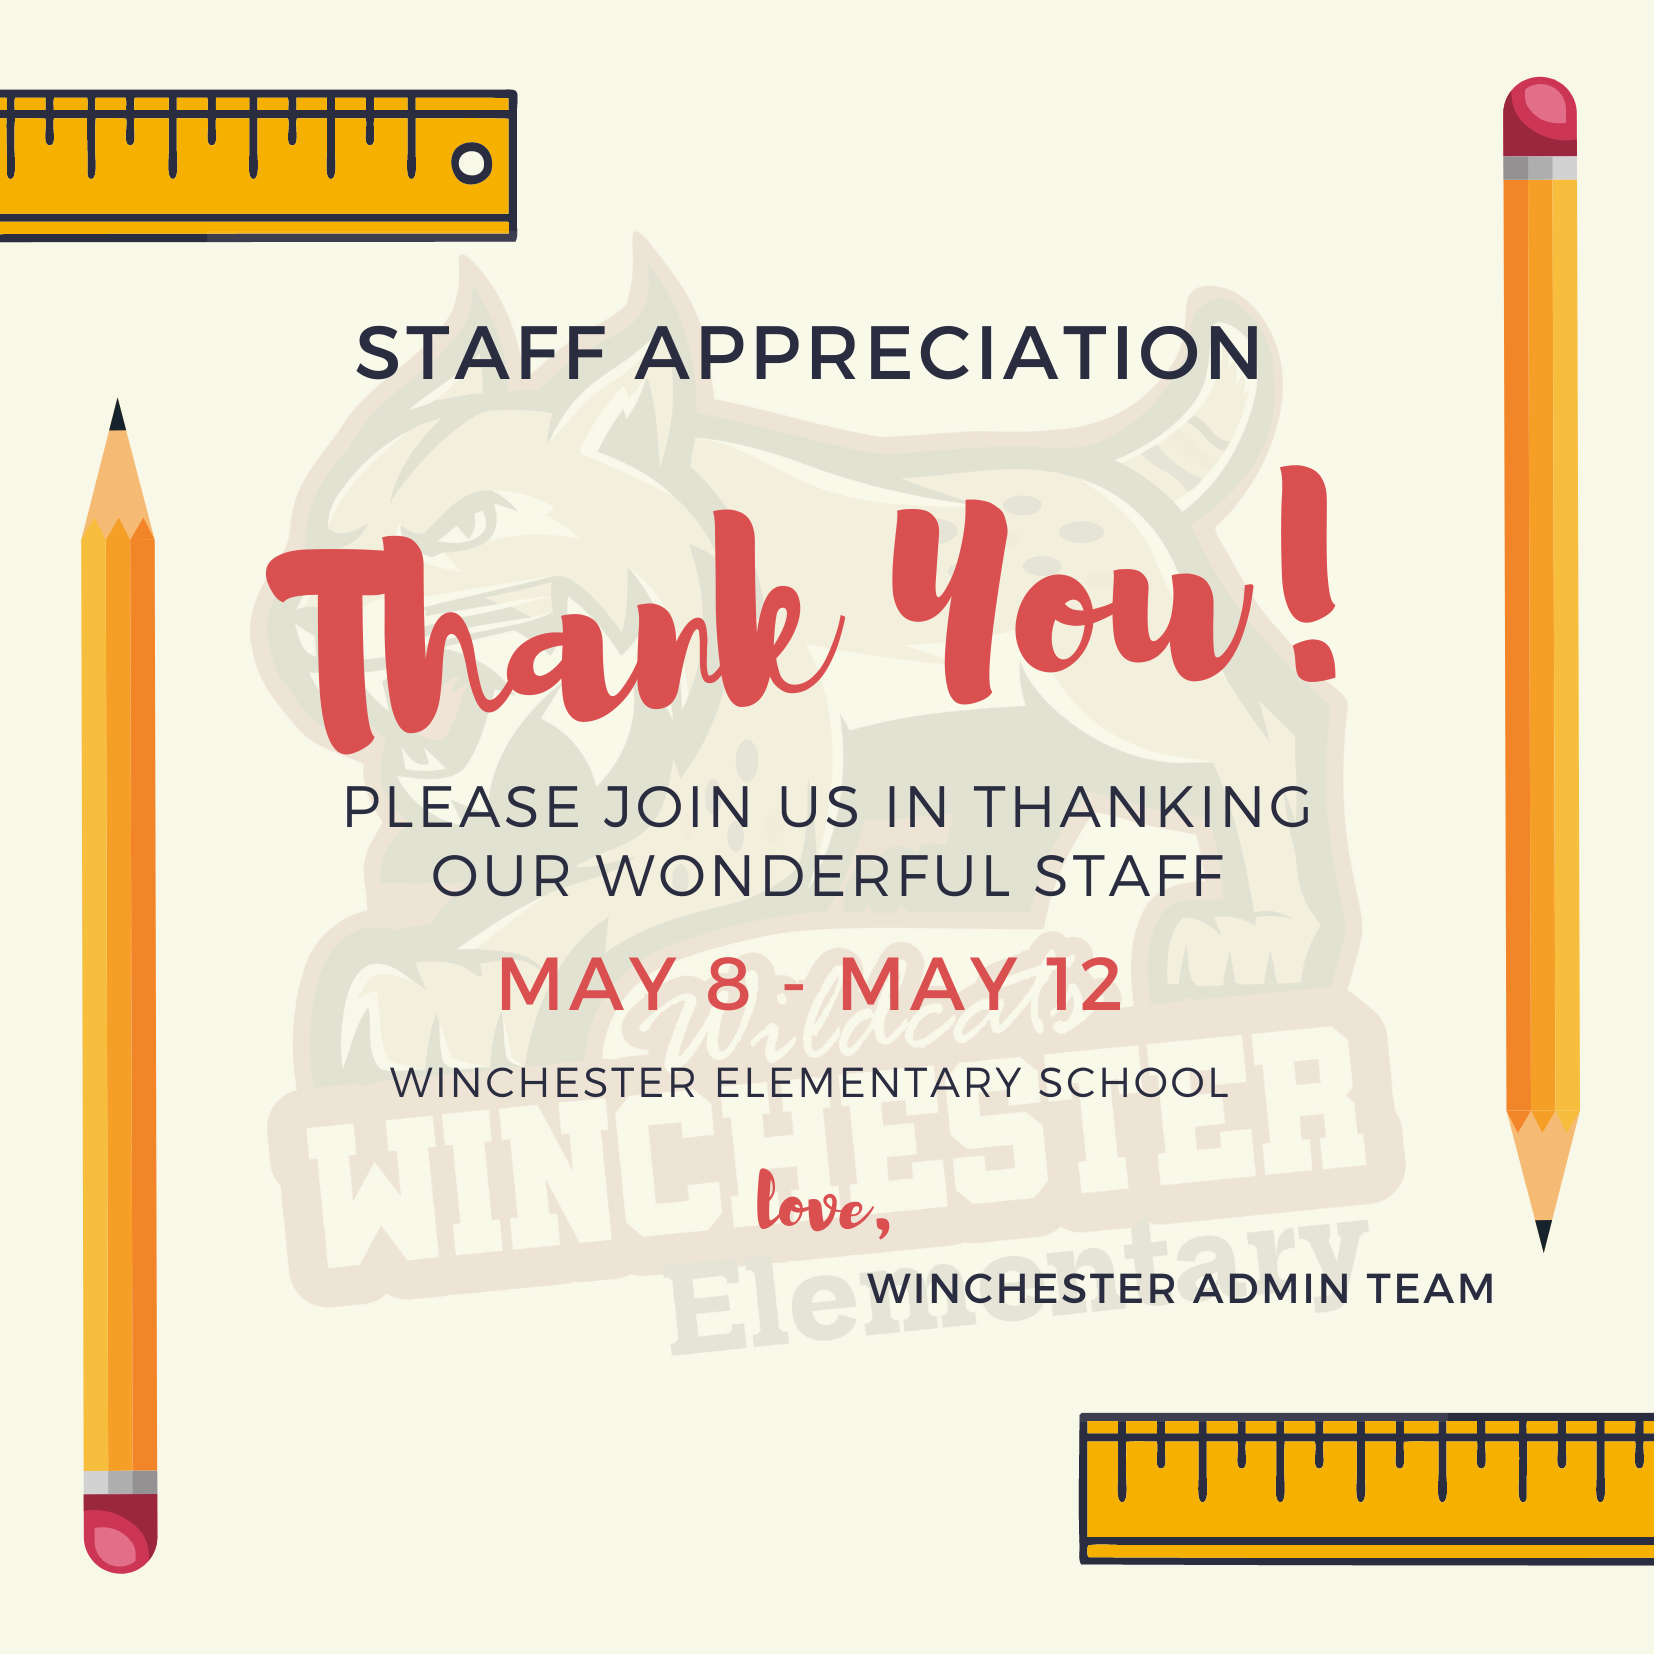 Staff Appreciation week